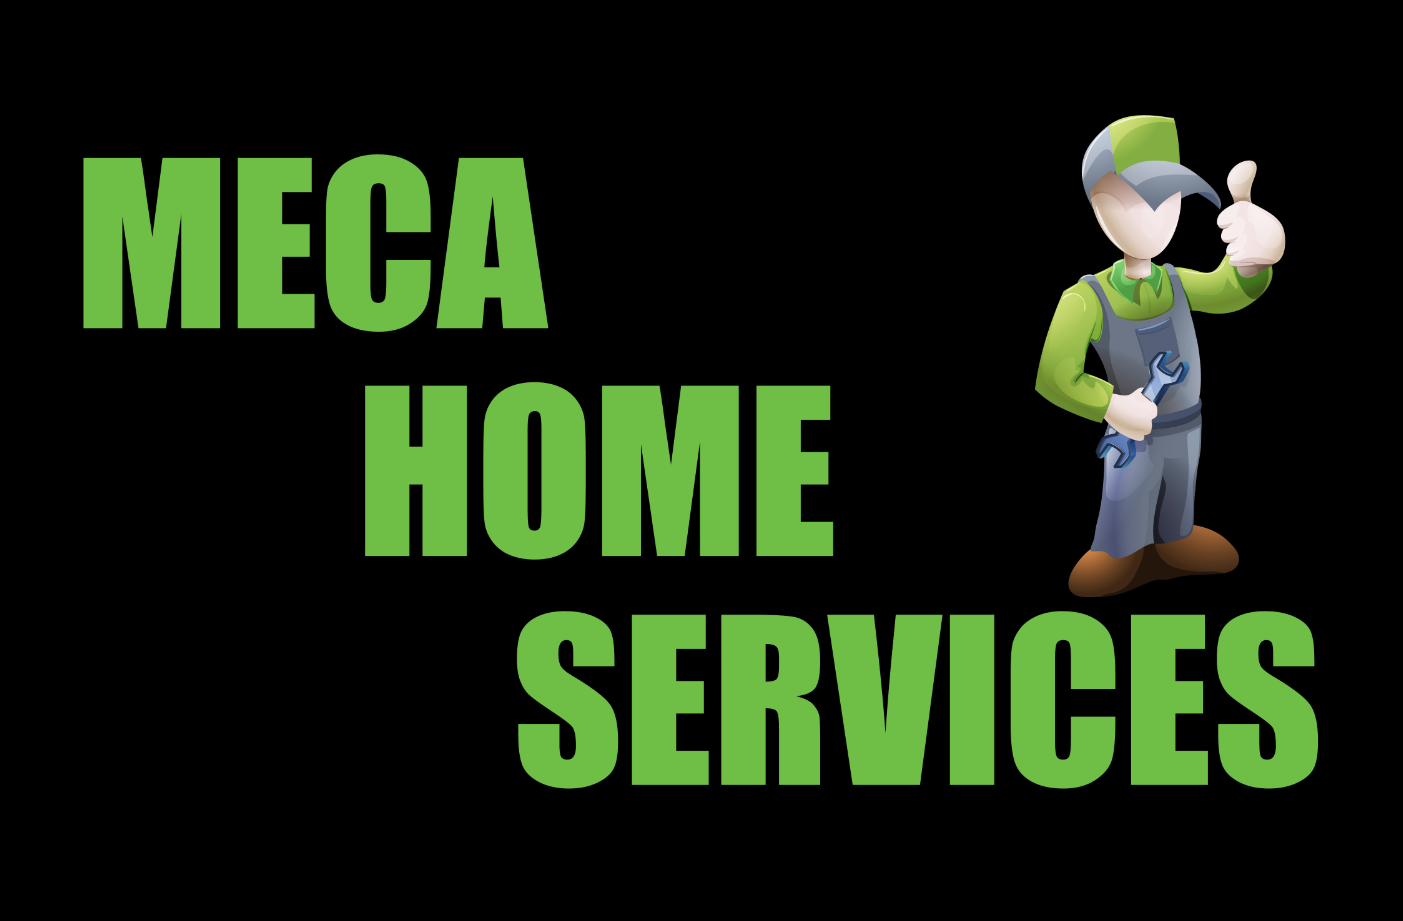 Méca Home services